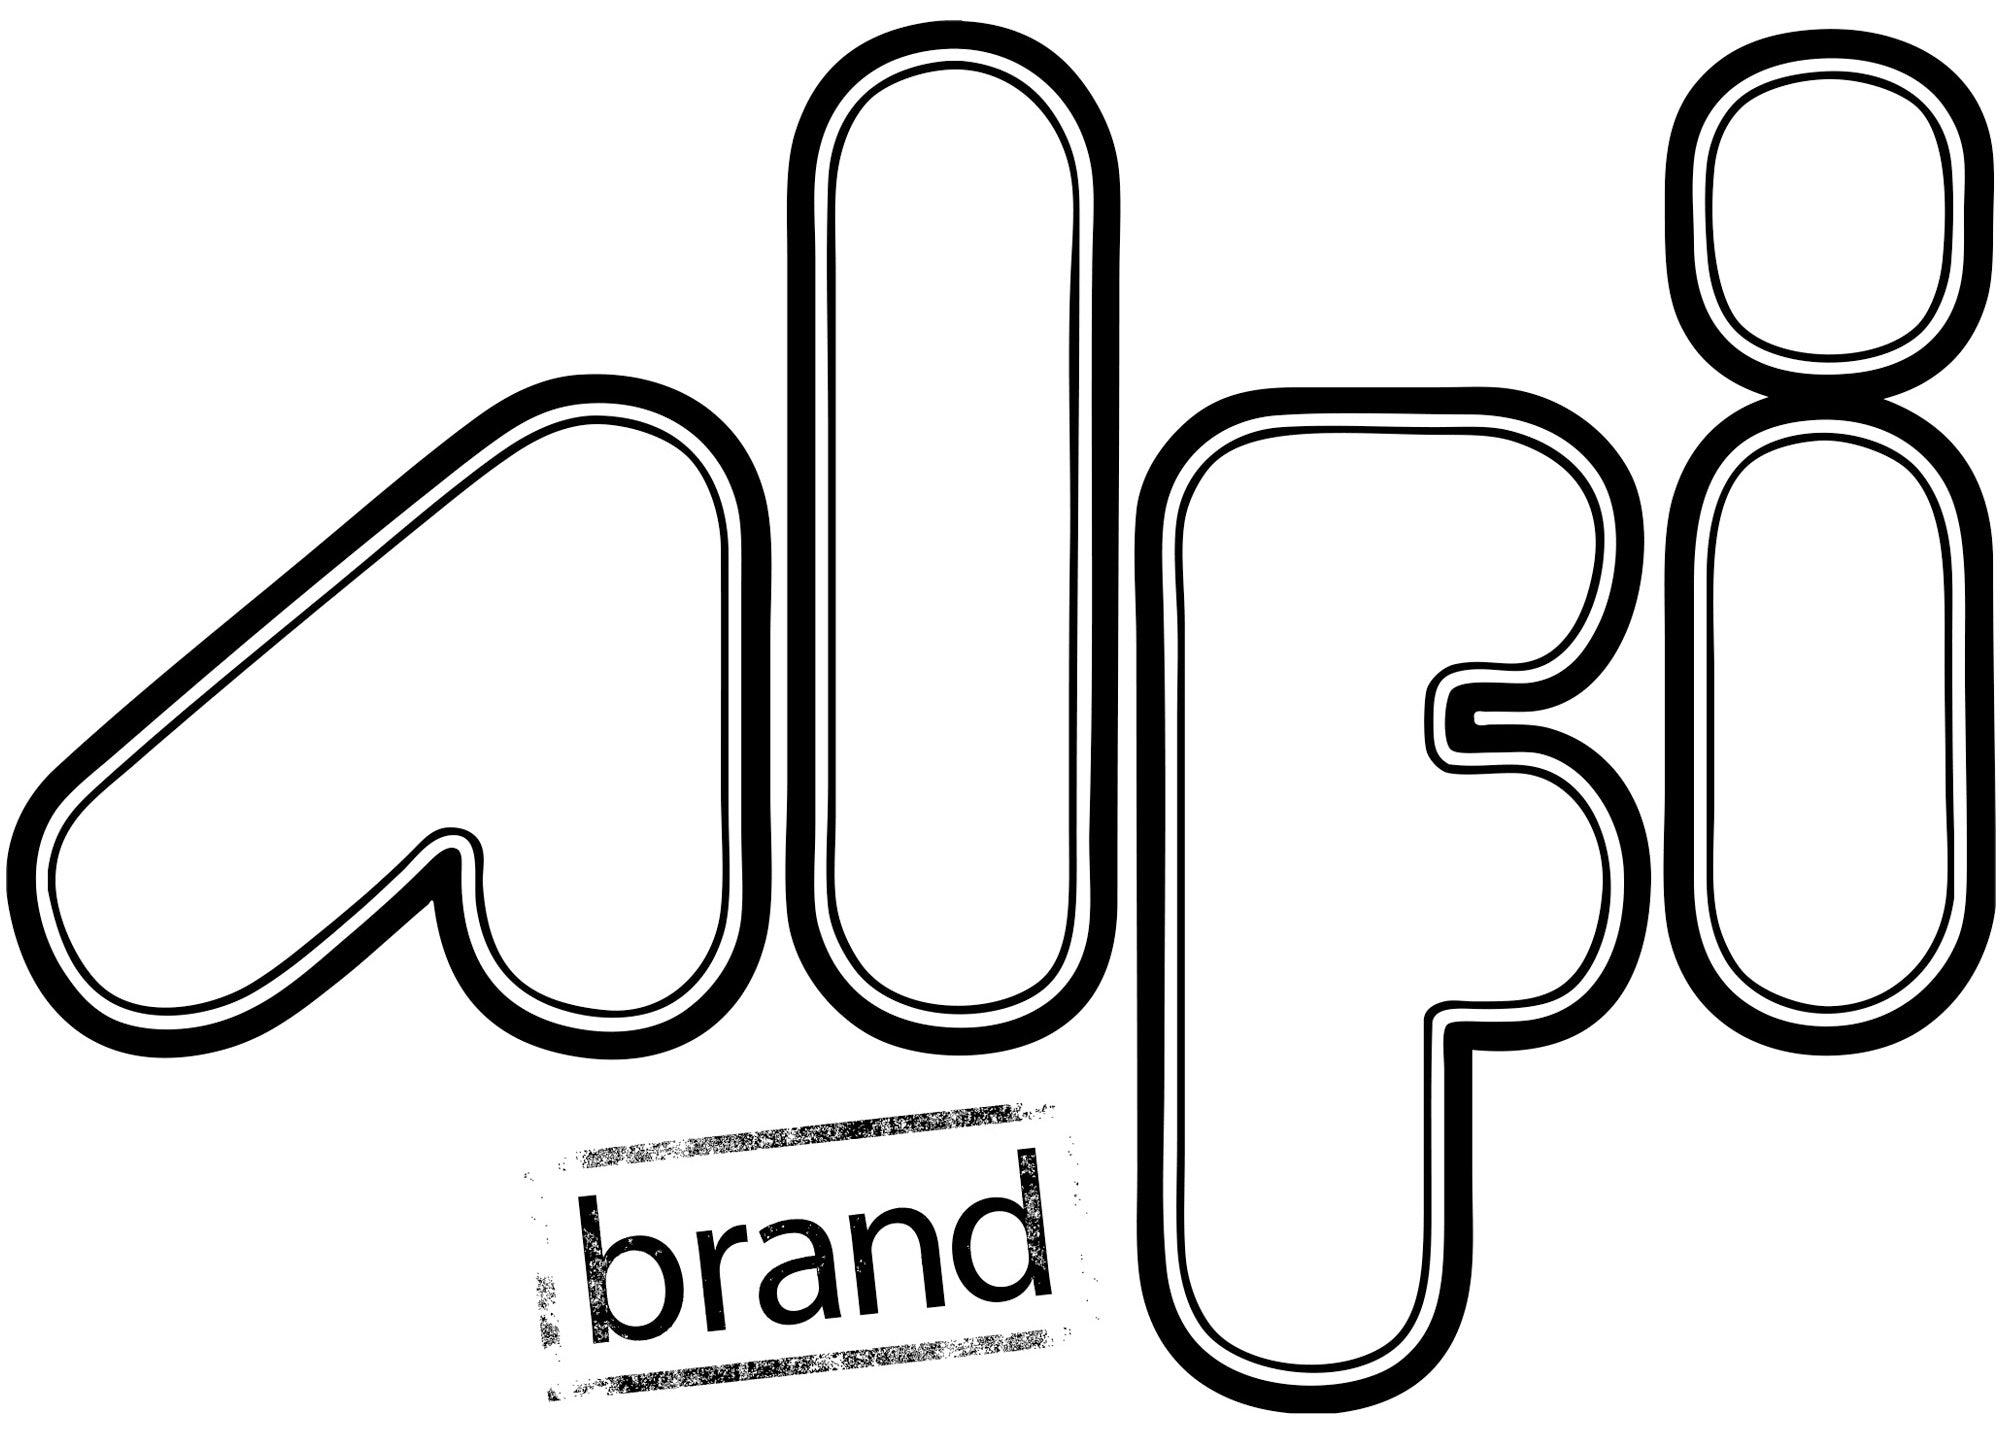 ALFI Brand - 67" White Rectangular Solid Surface Smooth Resin Soaking Bathtub | AB9942